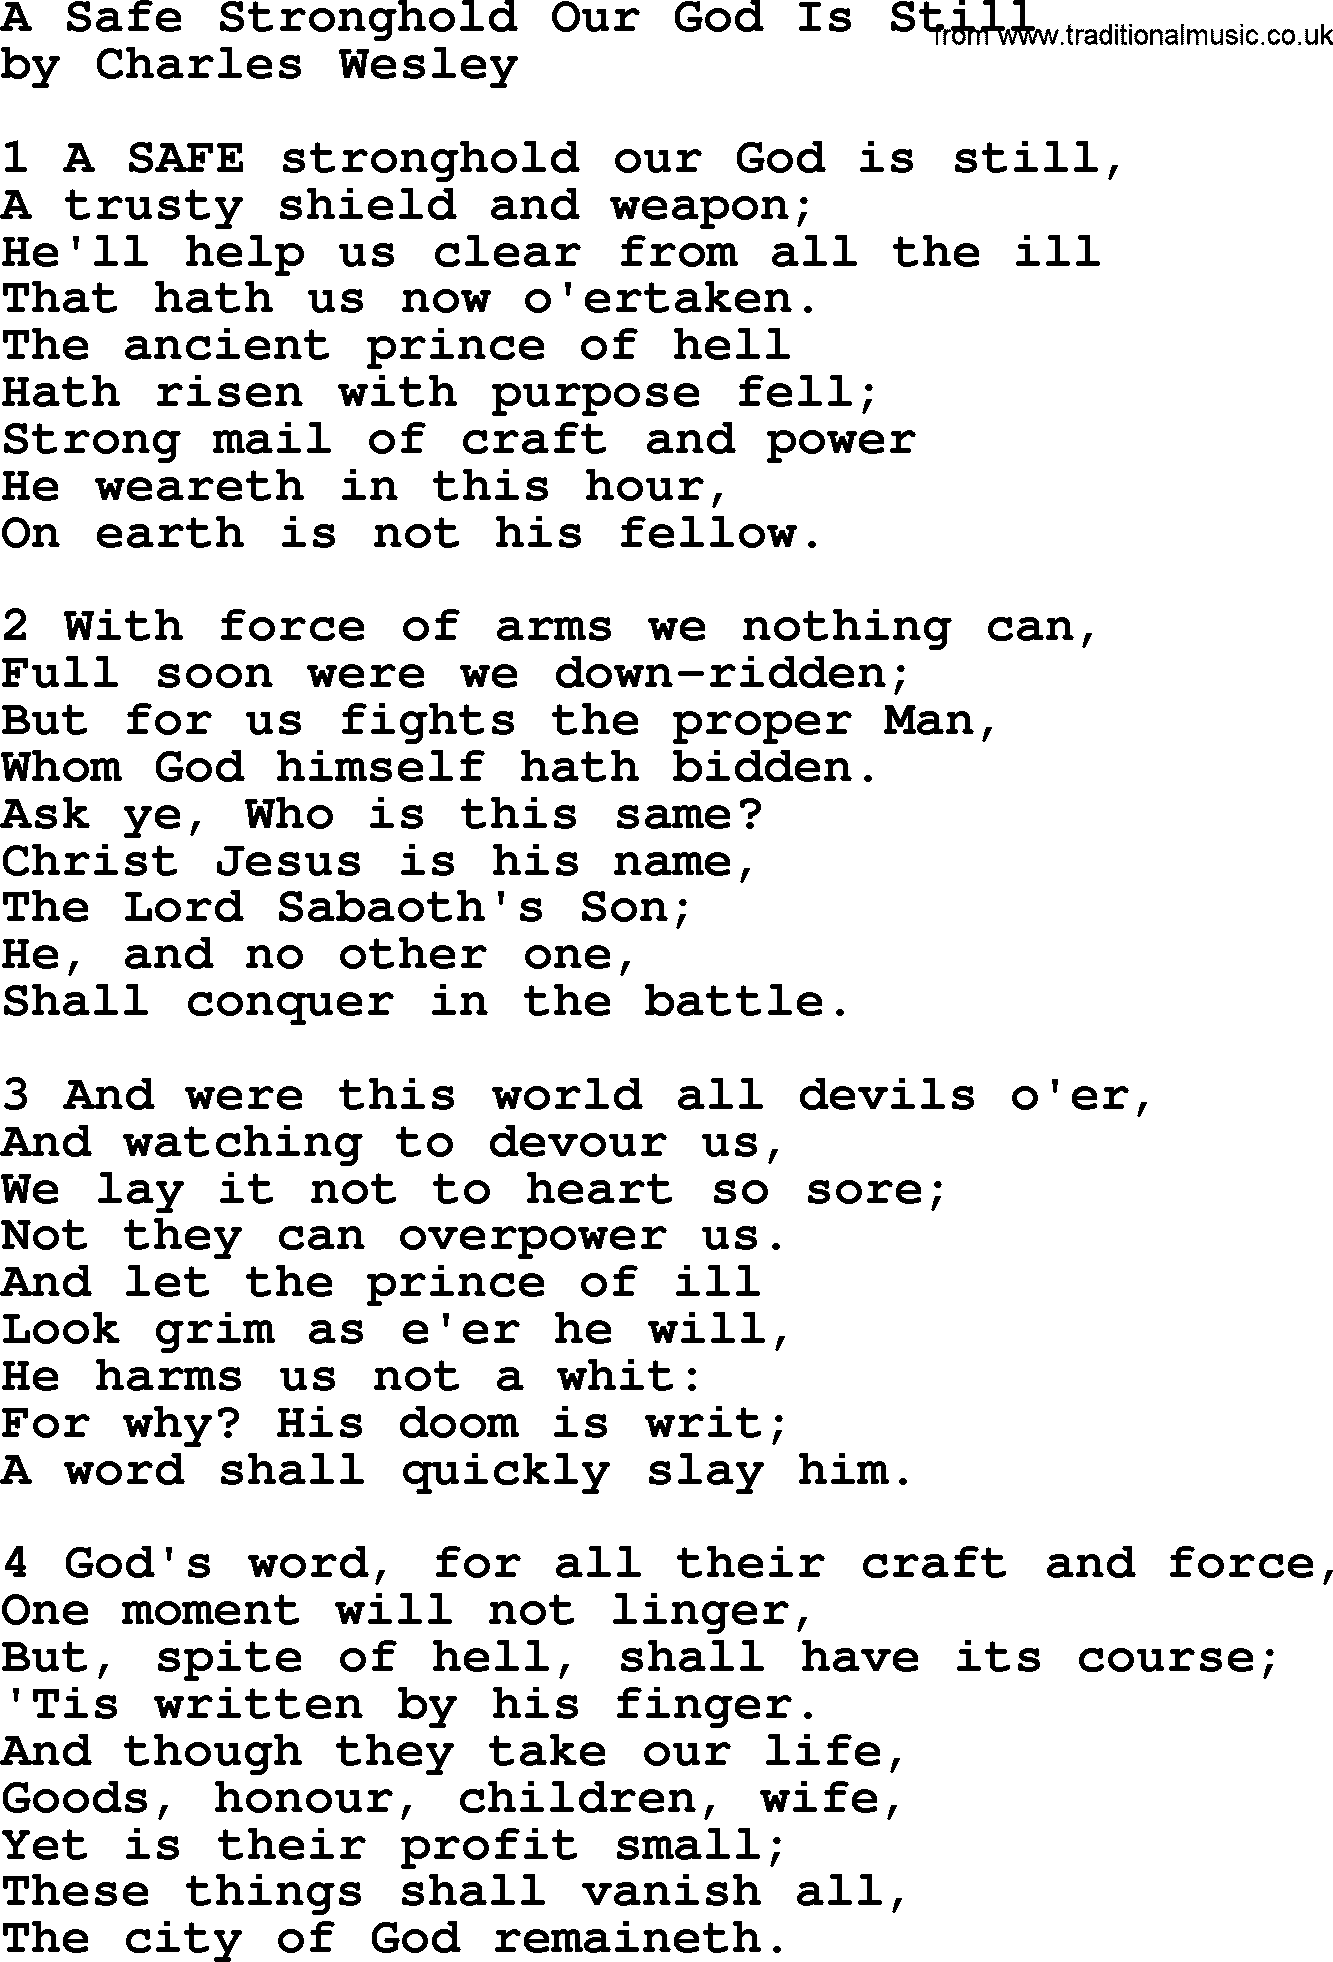 Charles Wesley hymn: A Safe Stronghold Our God Is Still, lyrics